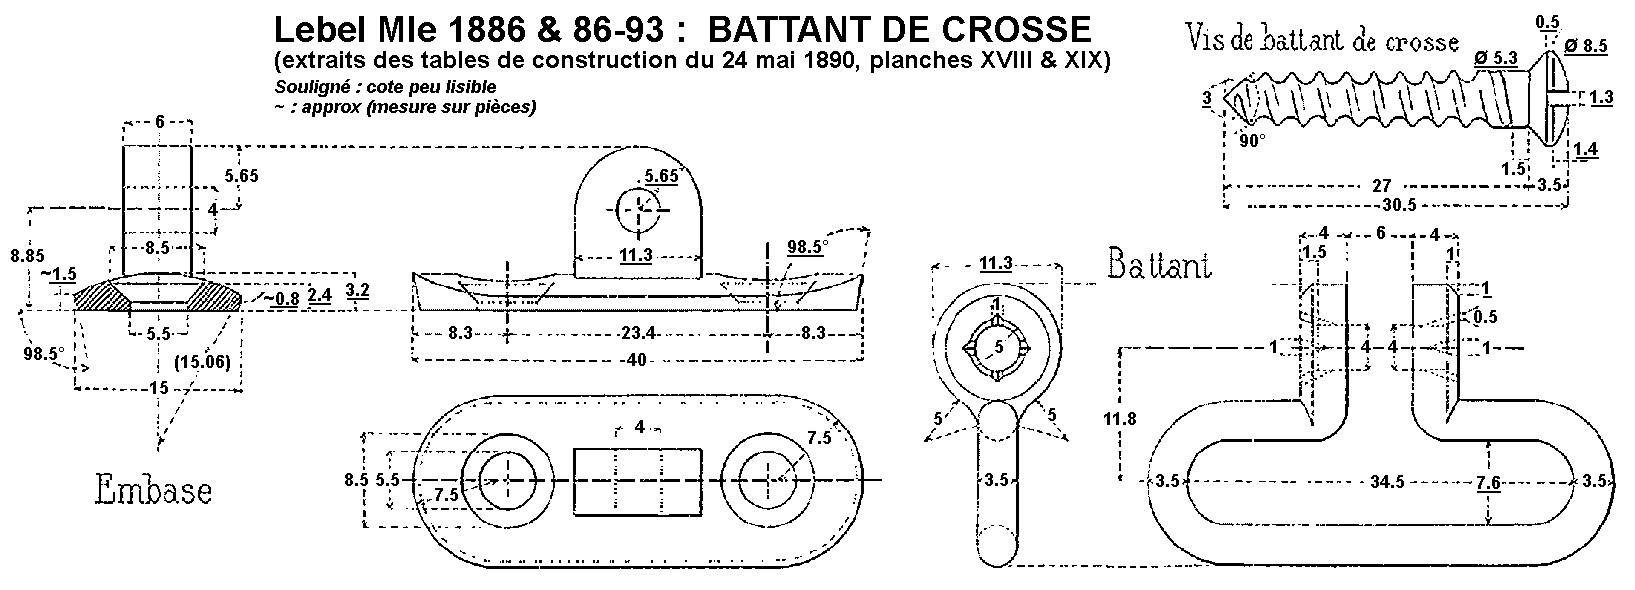 Customisation d'un Lebel 86-93 "de braco" Battan11